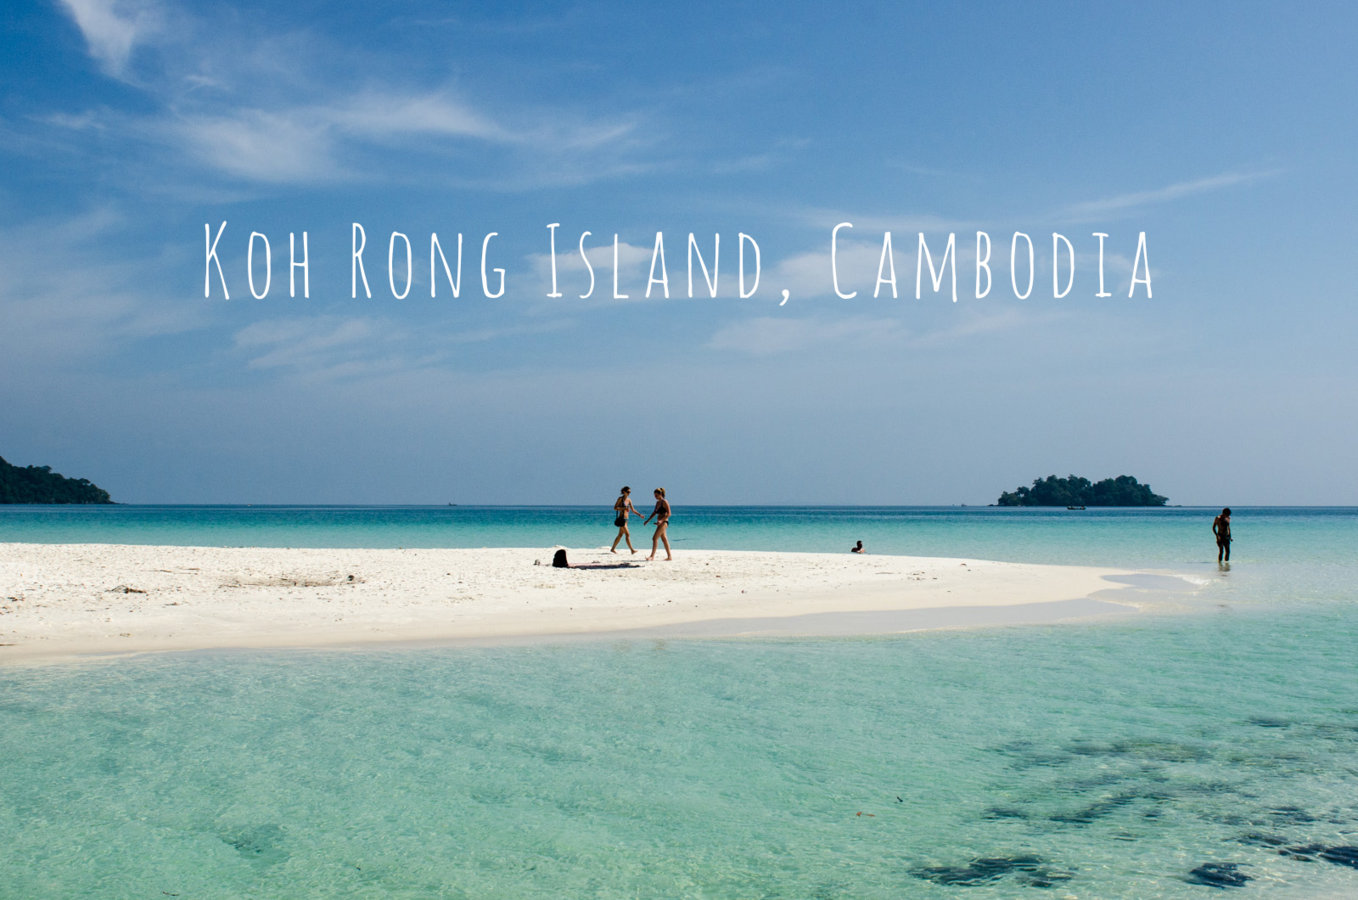 Koh-Rong-Island-Cambodia.jpg